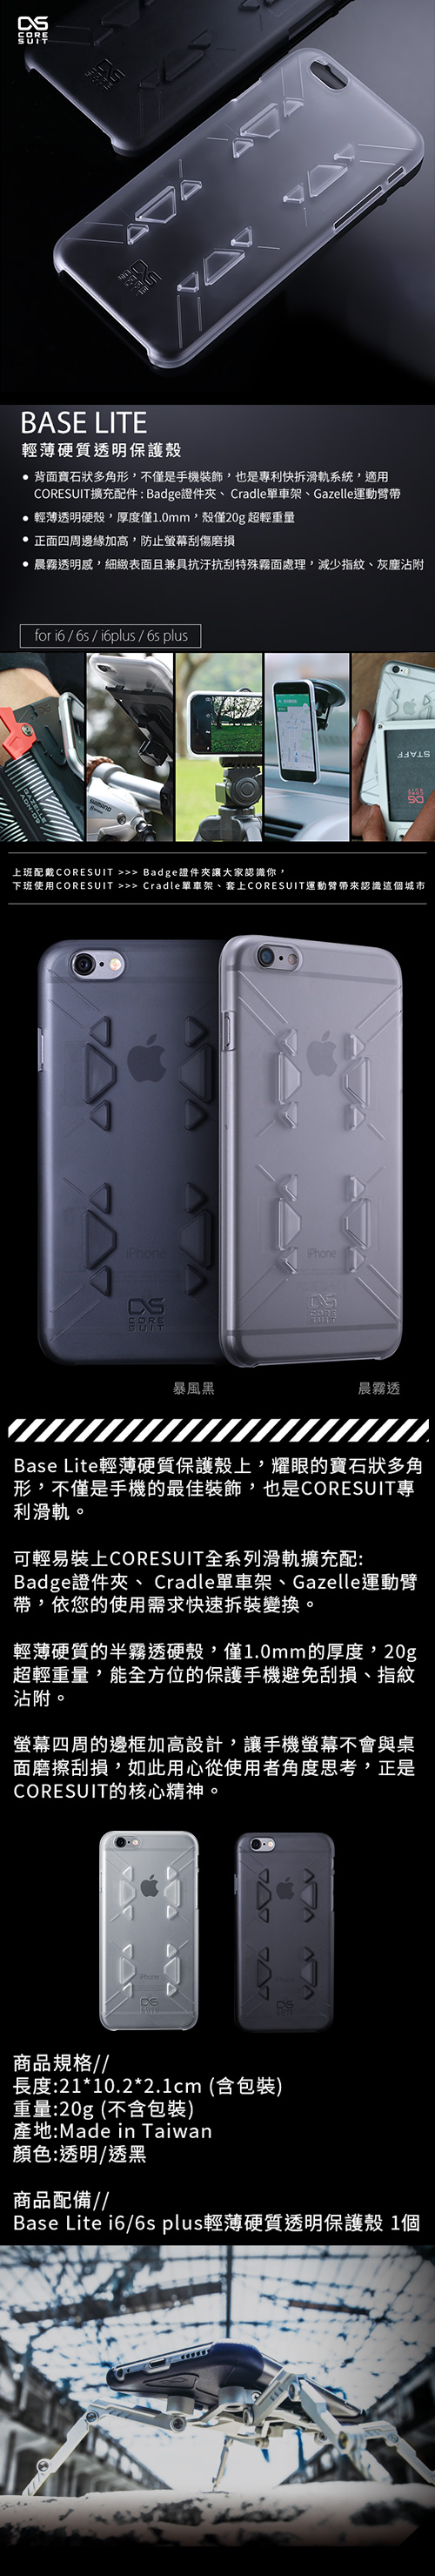 CORESUIT BASE LITE輕薄硬質透明保護殼 iPhone 6/6s 晨霧白